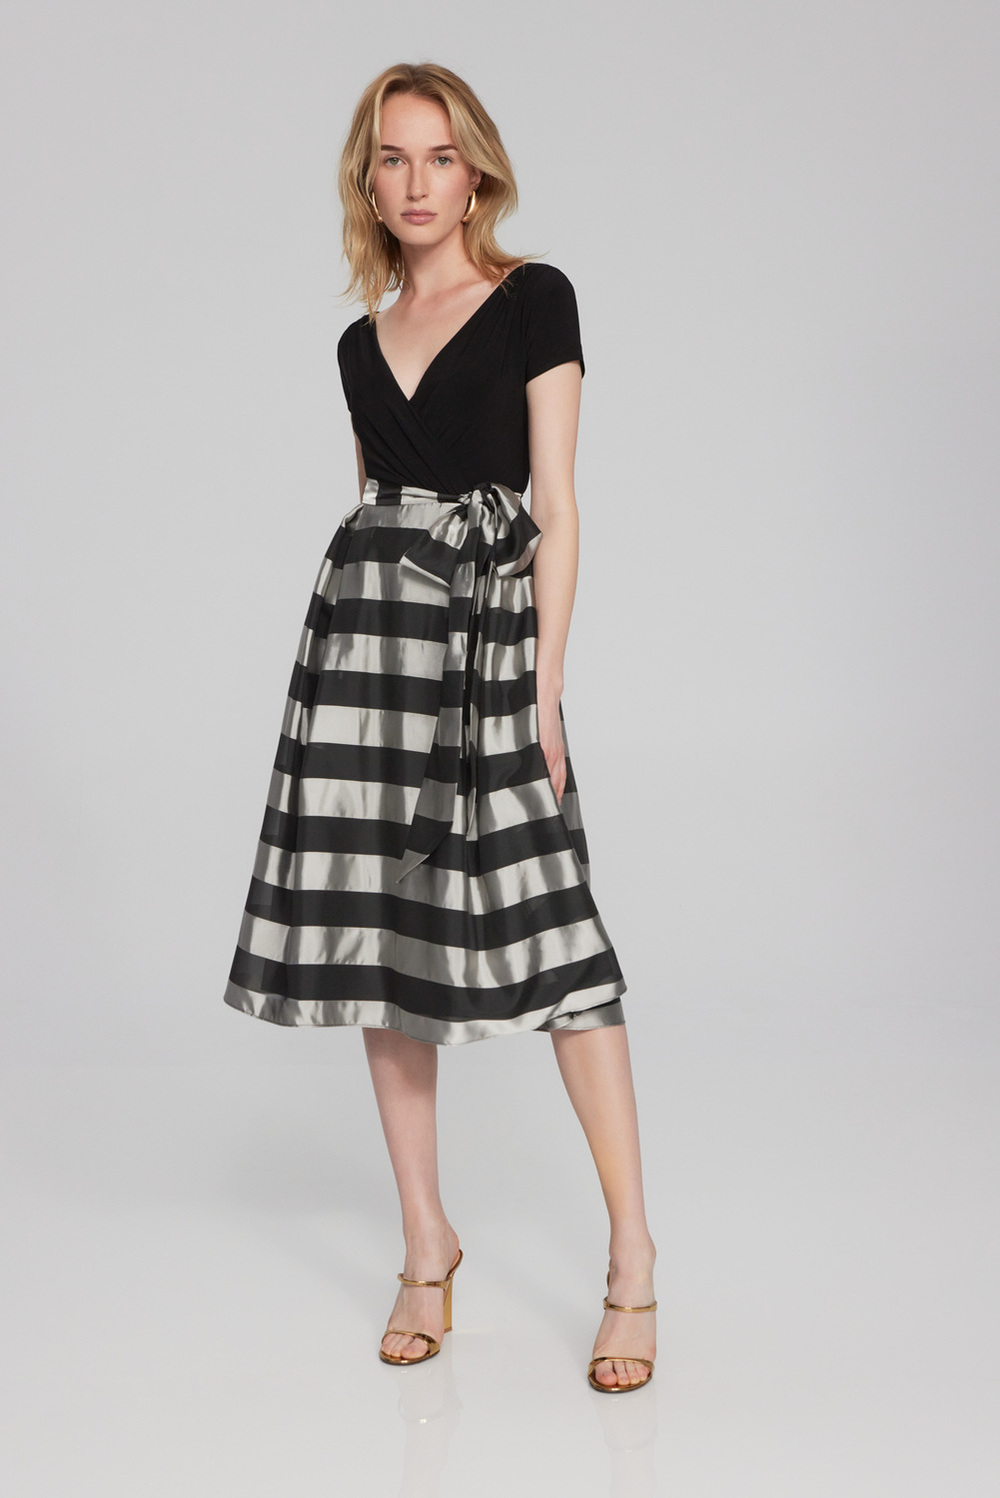 Striped Dual Fabric Dress Style 241748. Black/silver